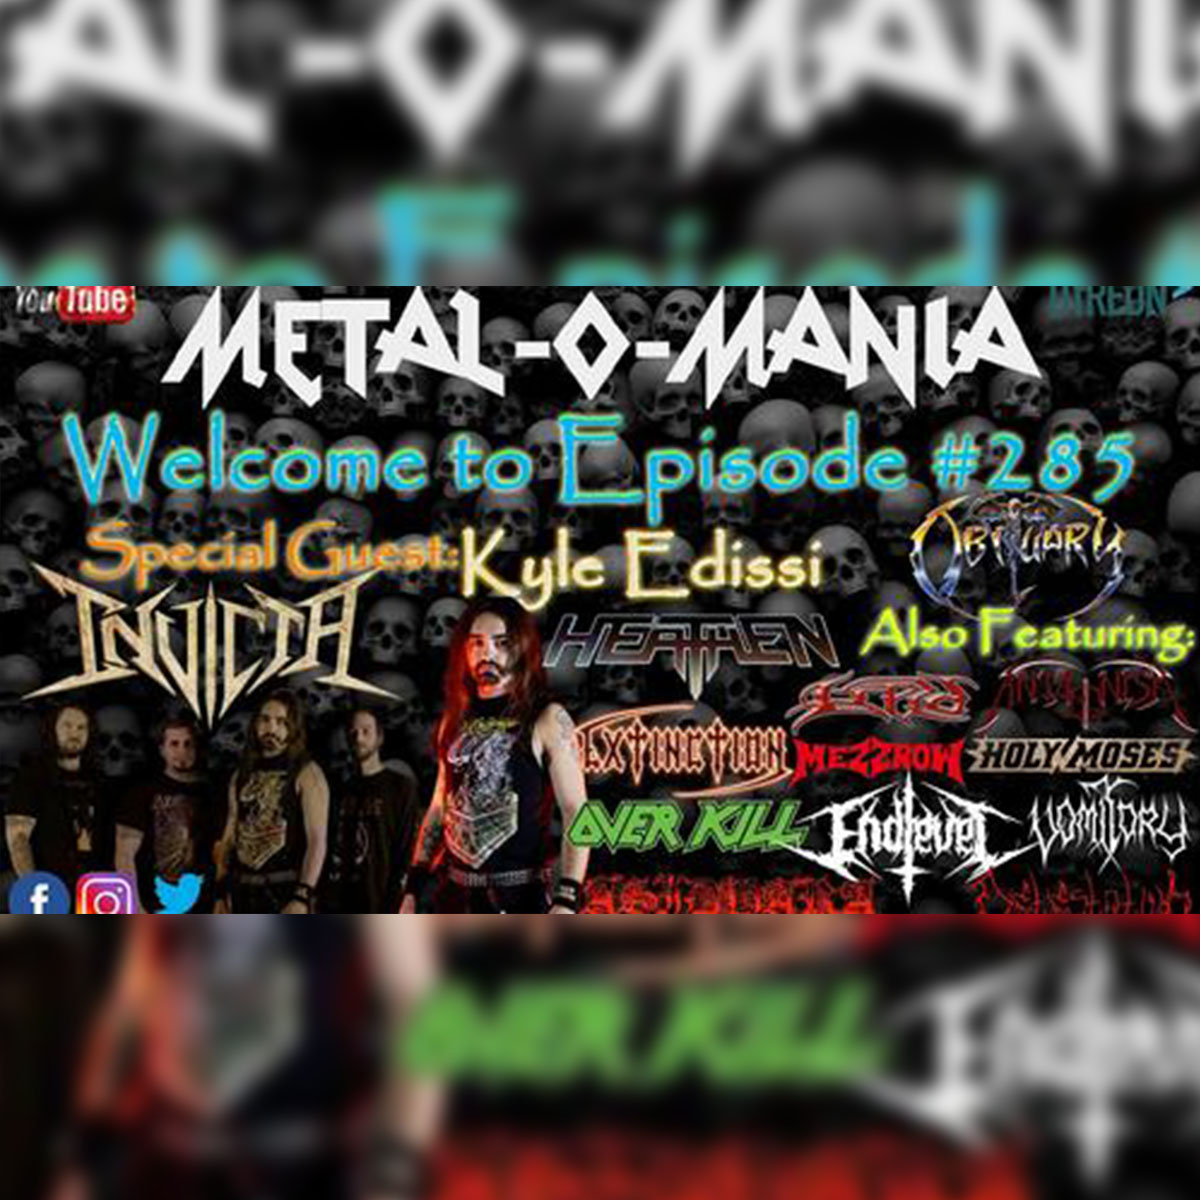 Broadcasting on Metal-O-Mania show